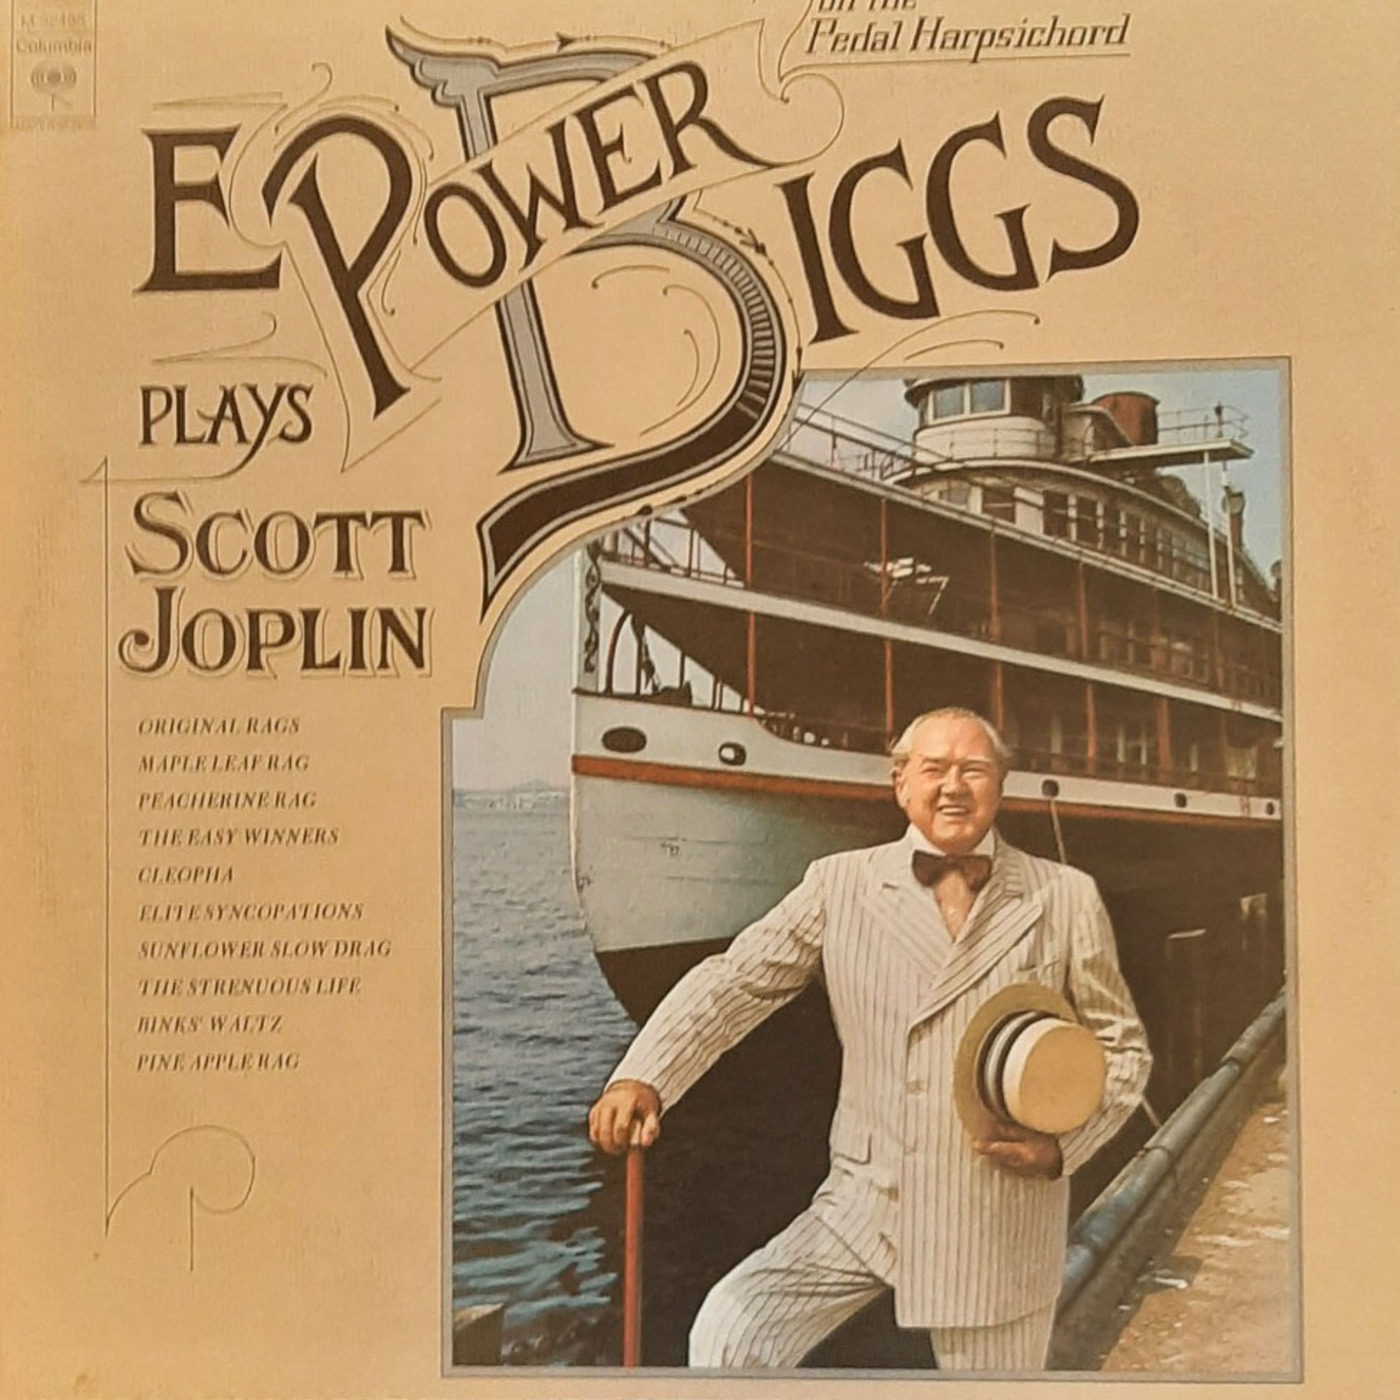 Episode 151: 17151 E Power Biggs Plays Scott Joplin on the Pedal Harpsichord